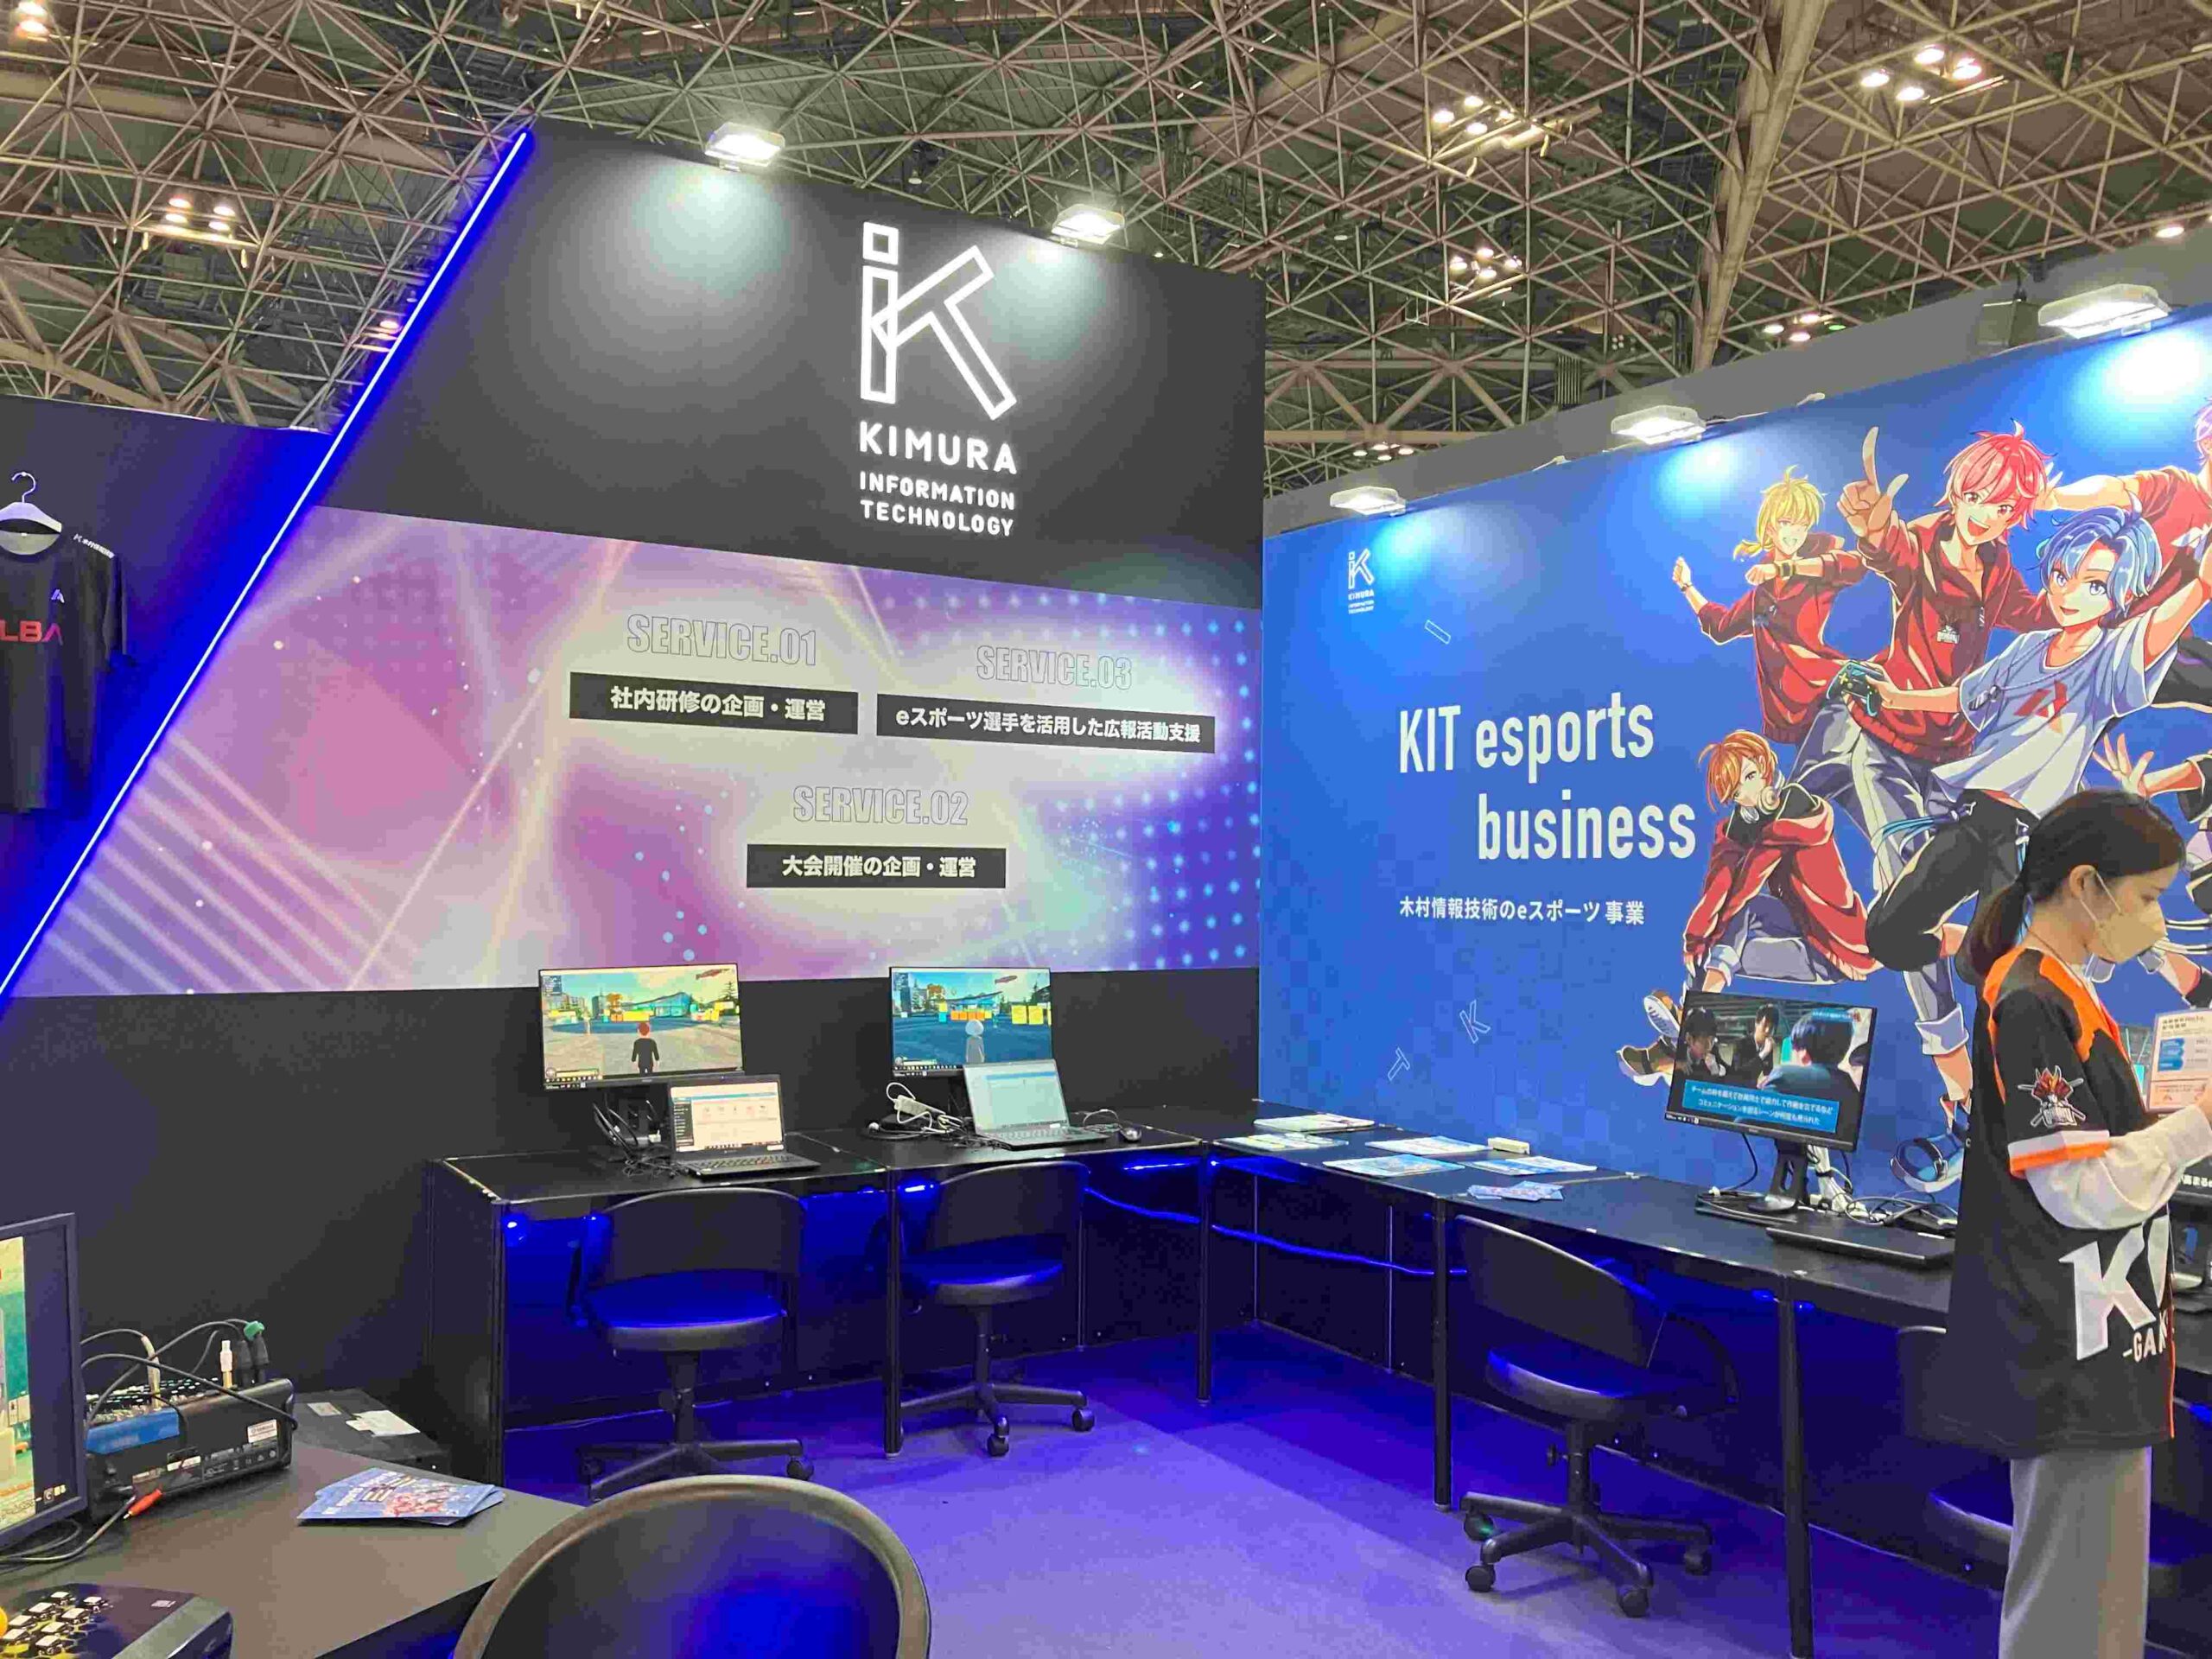 eスポーツの大会を開催されている木村情報技術のe-sport事業を説明する展示ブースを写した写真。